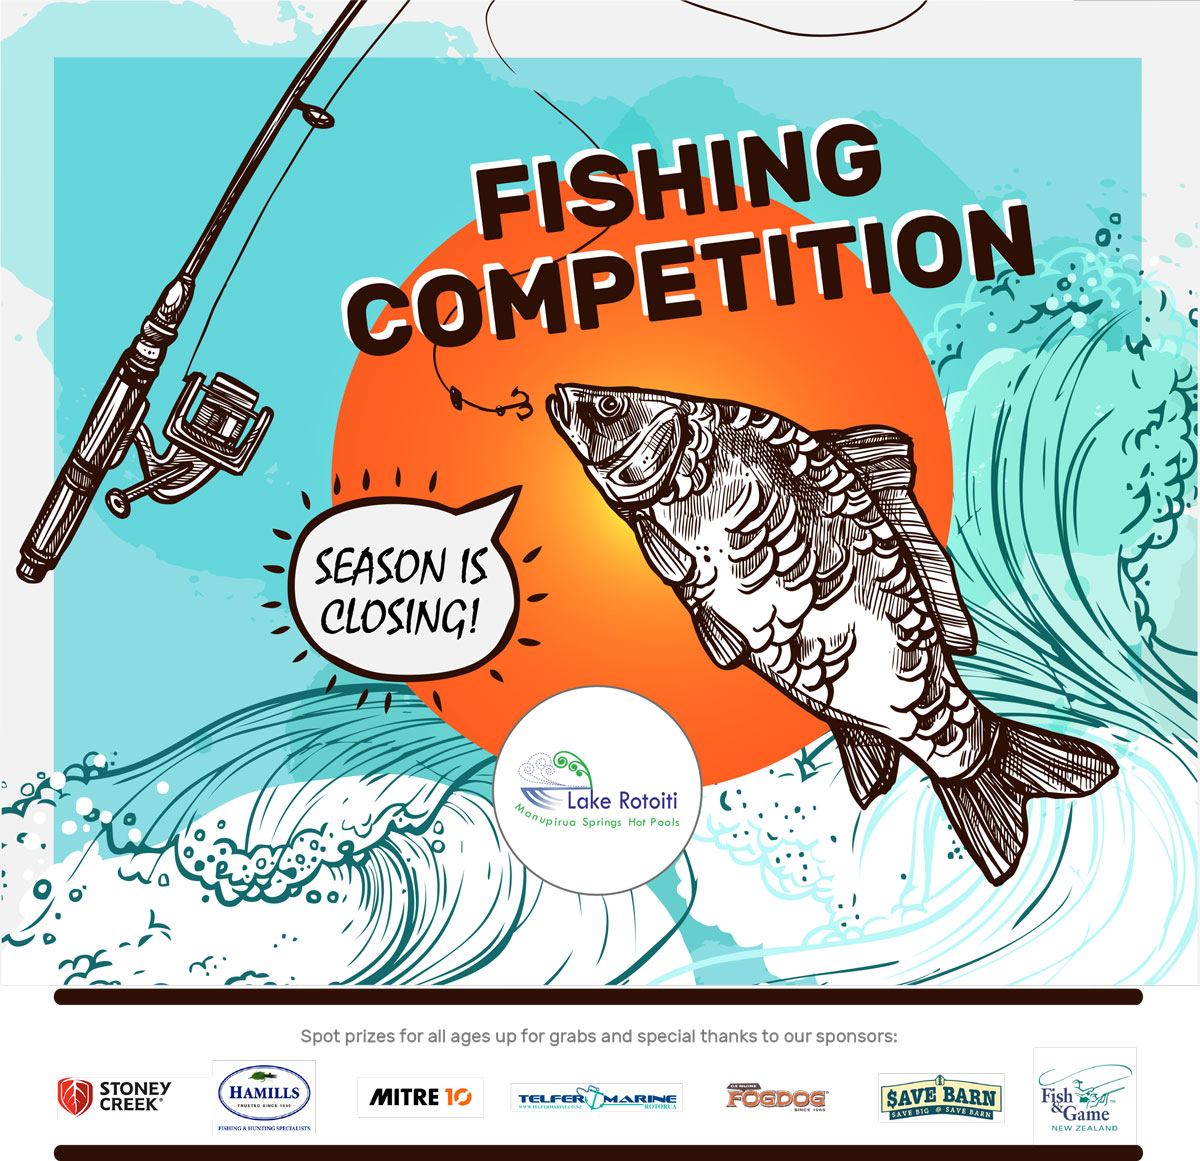 Lake Rotoiti Hot Pools June 2020 Fishing Competition